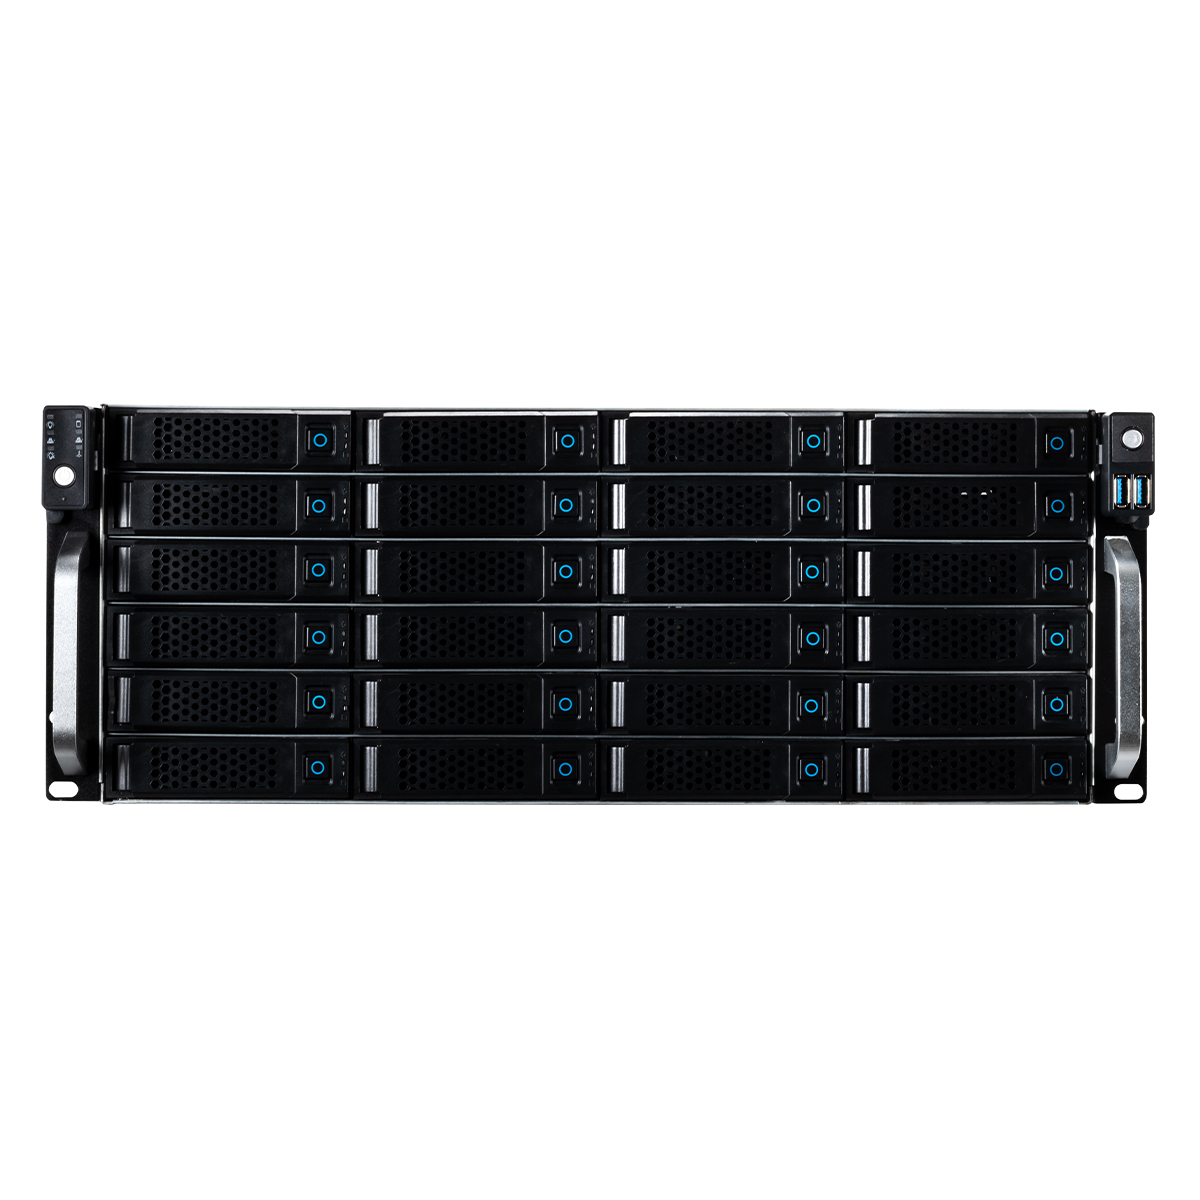 Unykach Server 4U Rack 24 Bays Hot Swap - Tailles de disque prises en charge 2,5", 3,5" - Cartes mères compatibles EEB, CEB, ATX, MicroATX - USB-A 2.0 - 3 ventilateurs 120 mm inclus